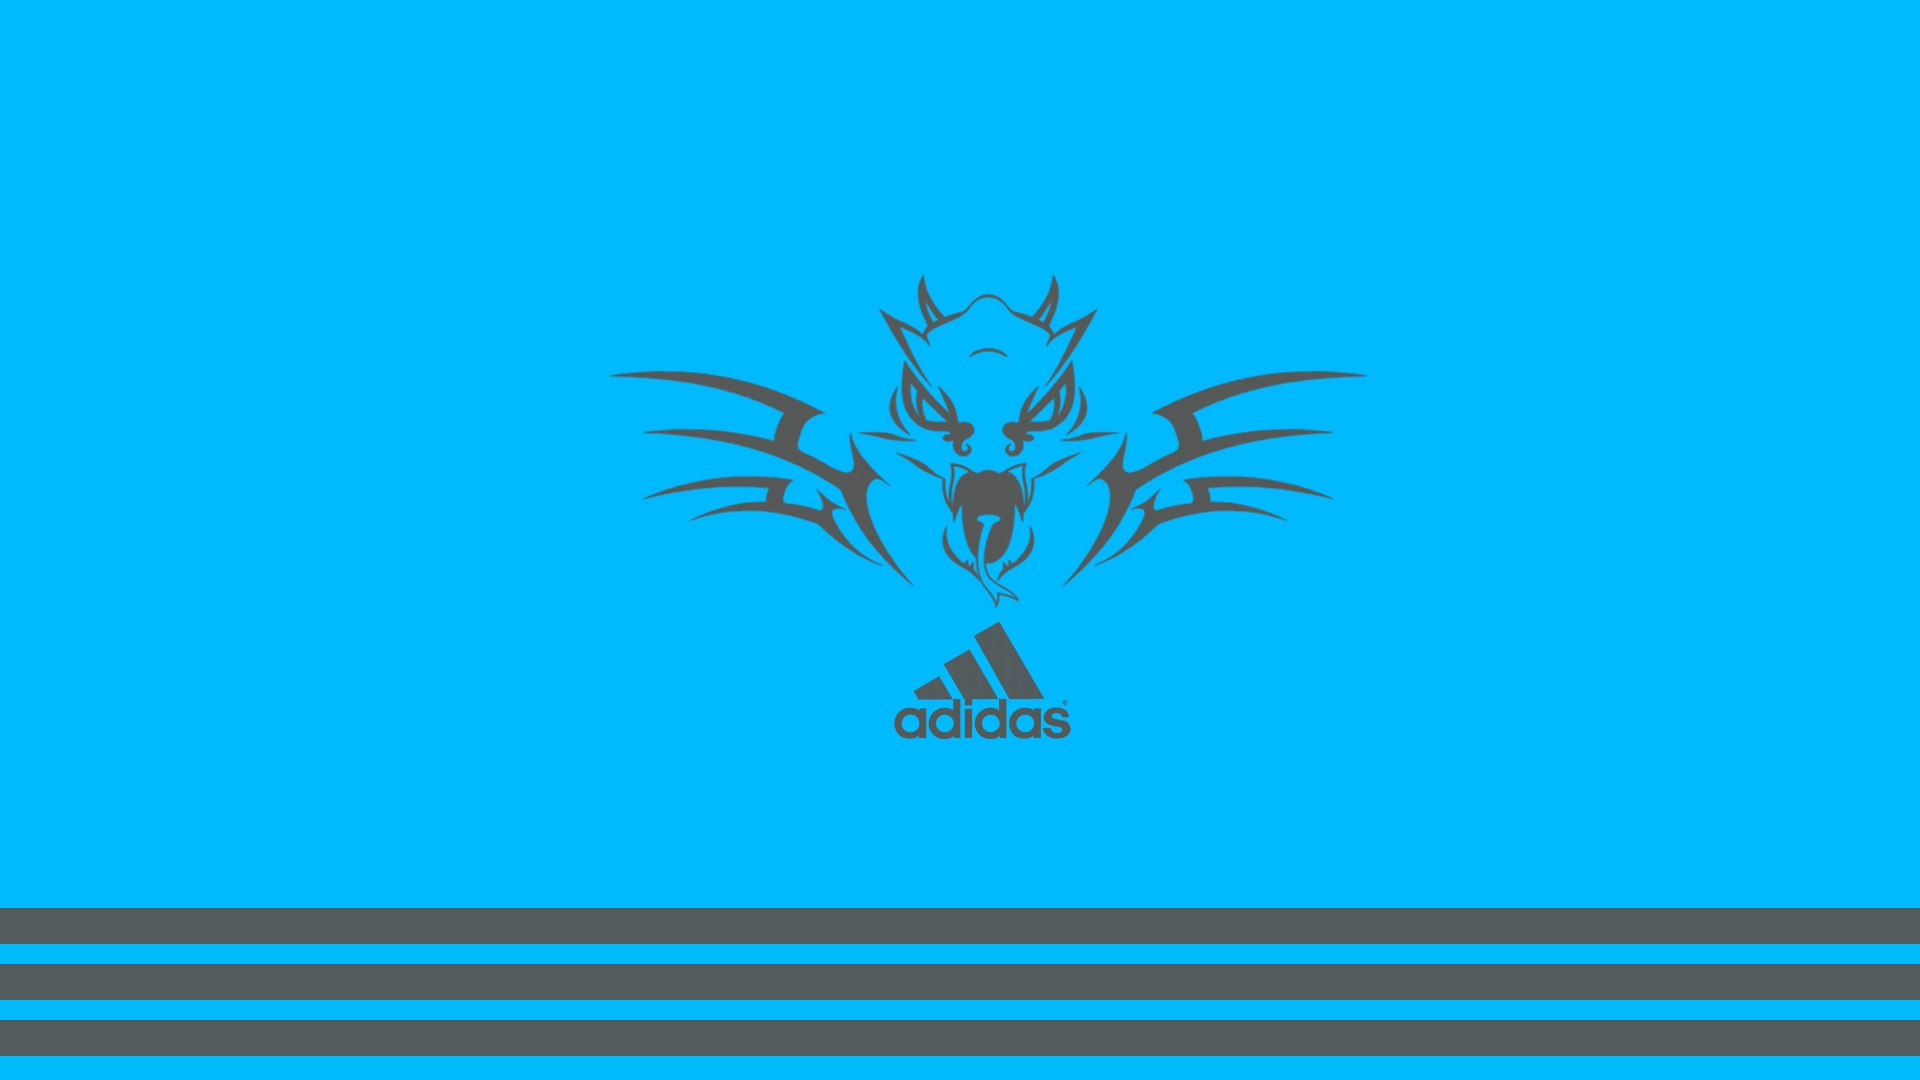 Adidas Fantasy Logo for 1920 x 1080 HDTV 1080p resolution